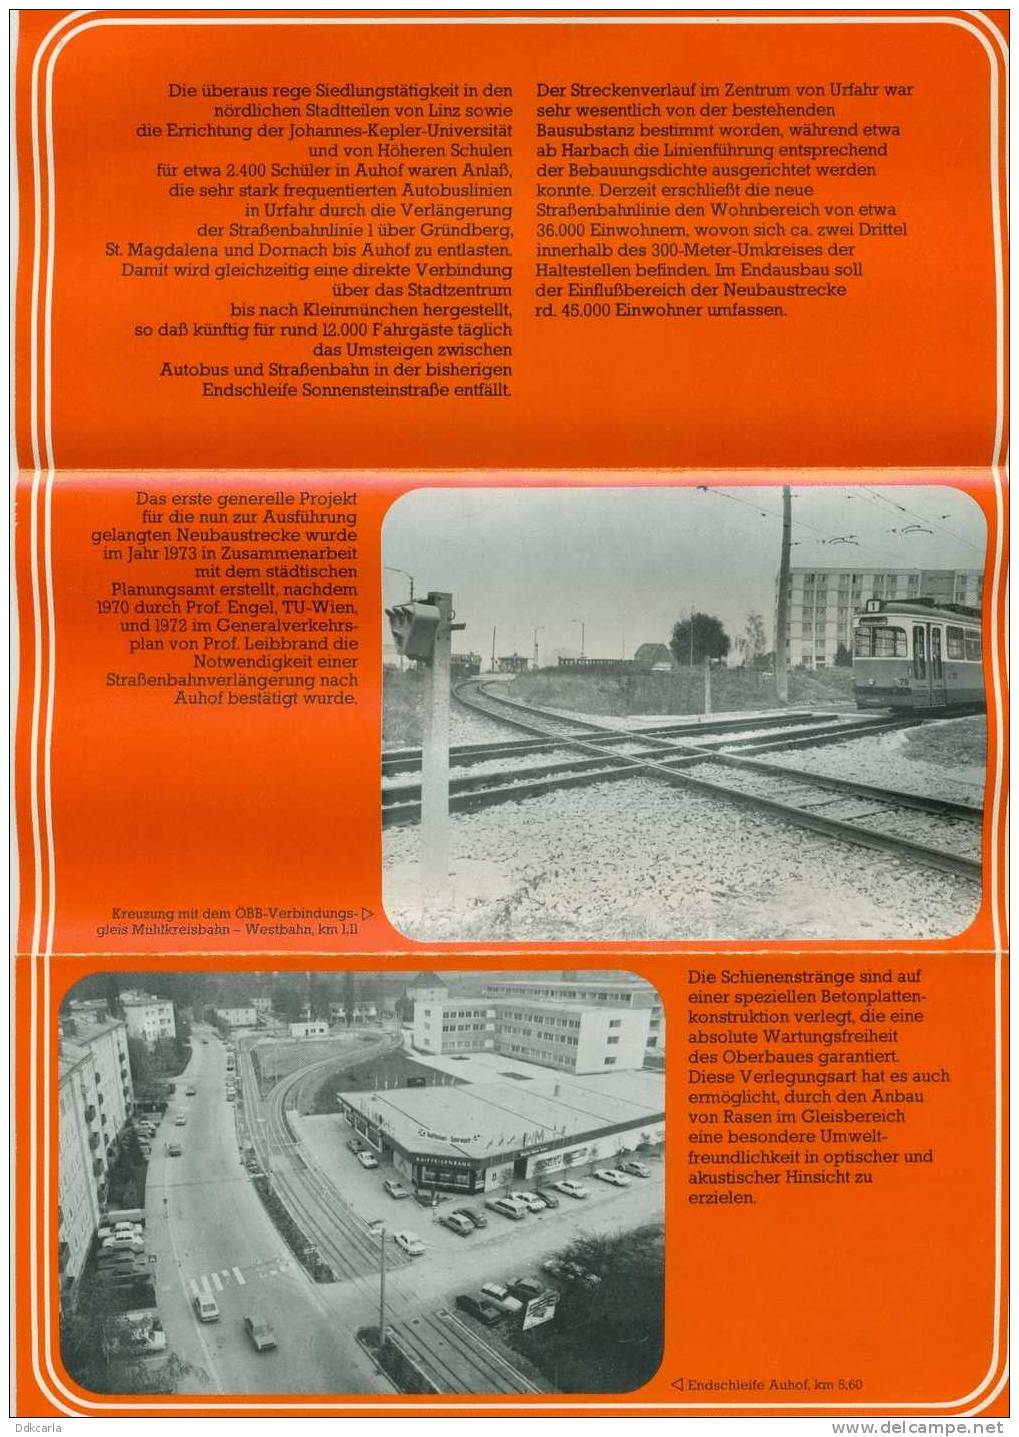 Dépliant - ESG StraBenbahnlinie Auhof - Dezember 1977 - Trasporti